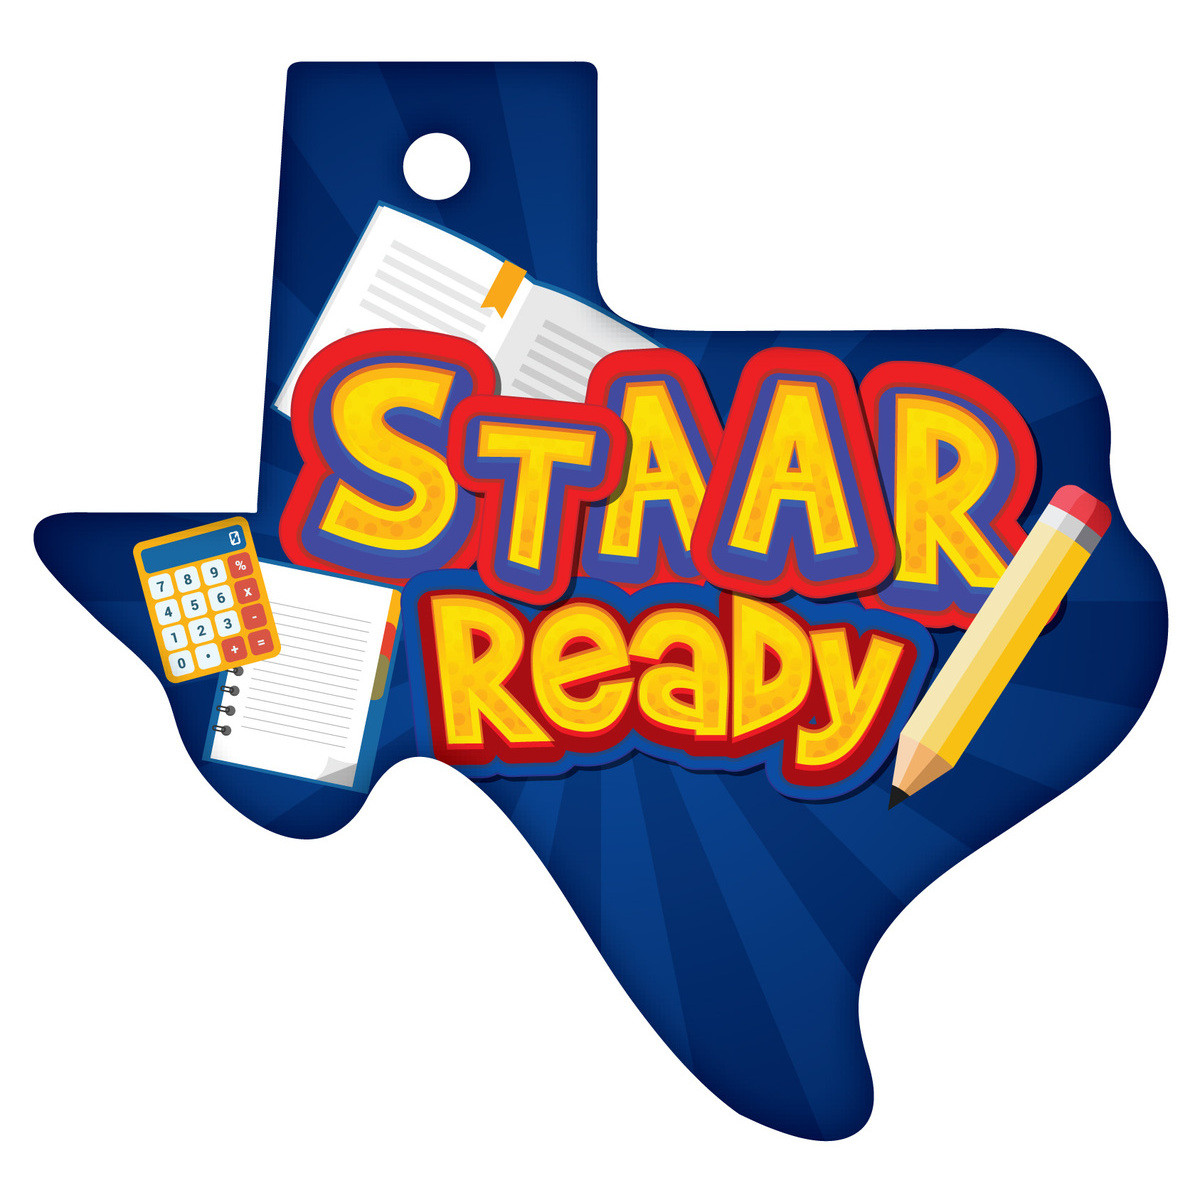 STAAR Ready Texas Brag Tag Testing